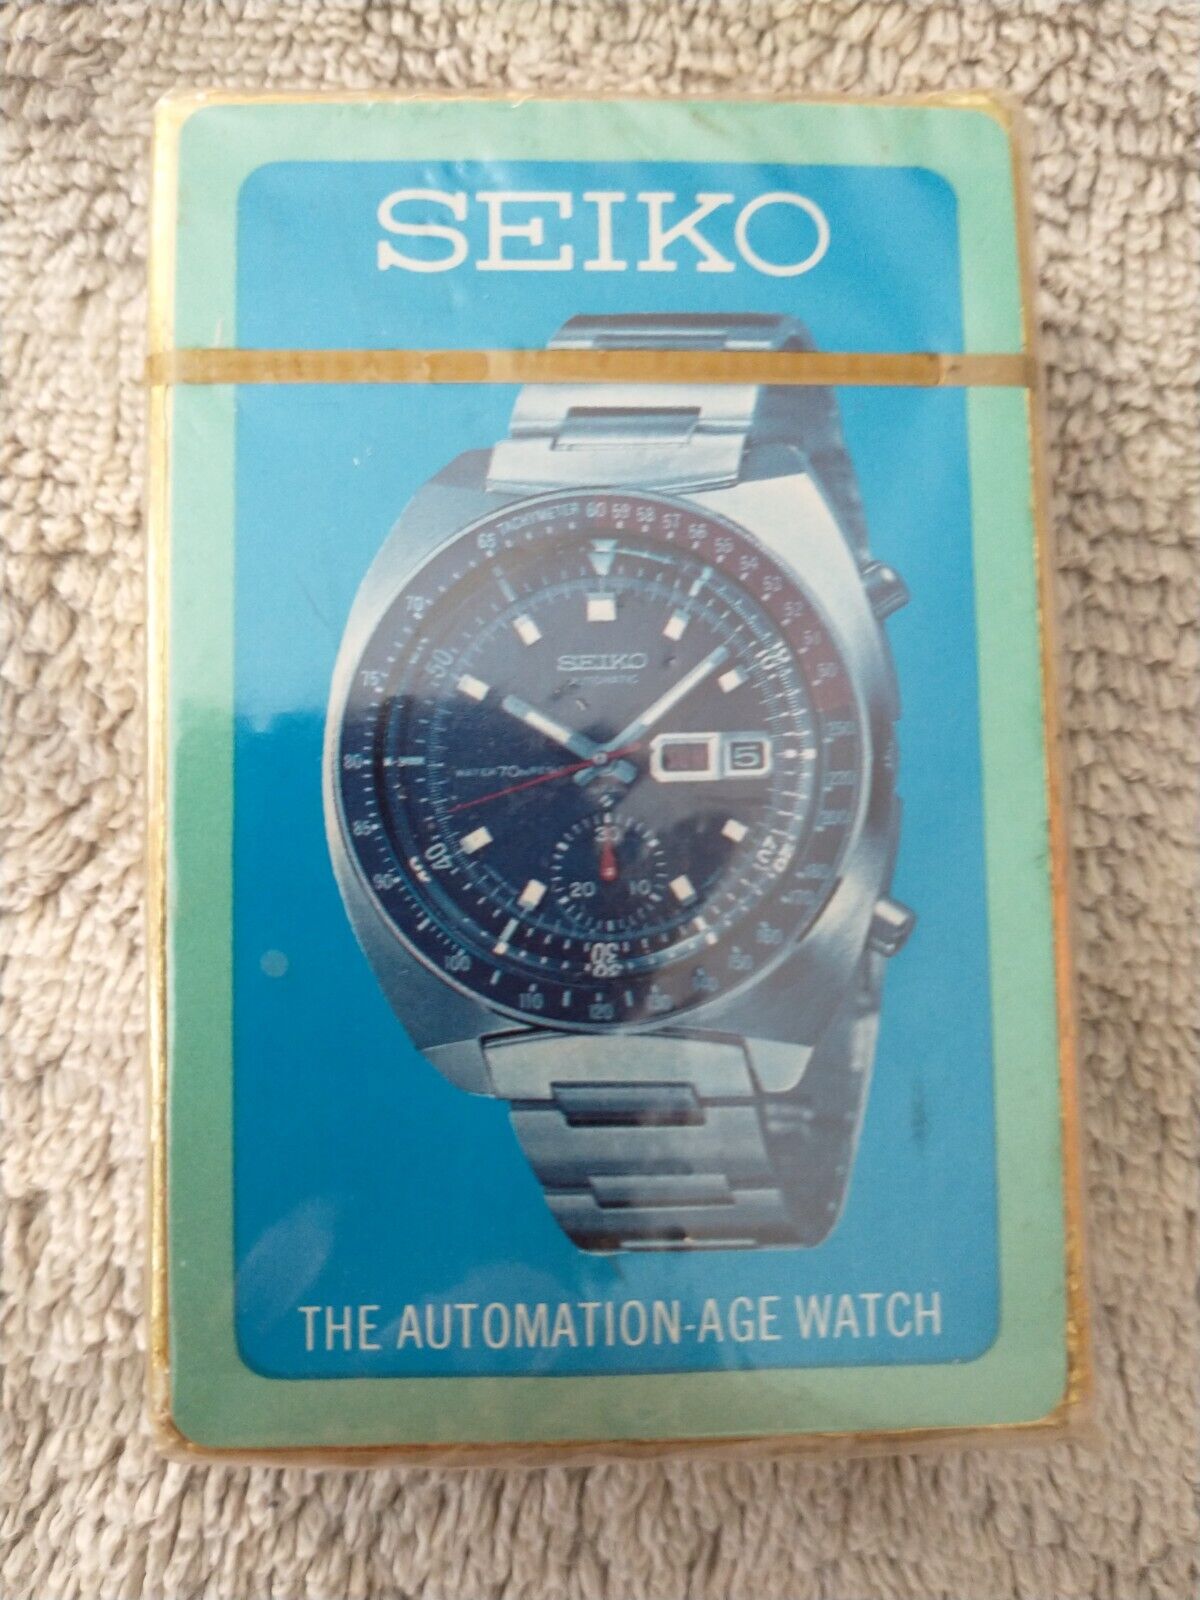 Rare Seiko watch Pogue 6139-6002 Chronograph Vintage Playing Cards (Sealed)